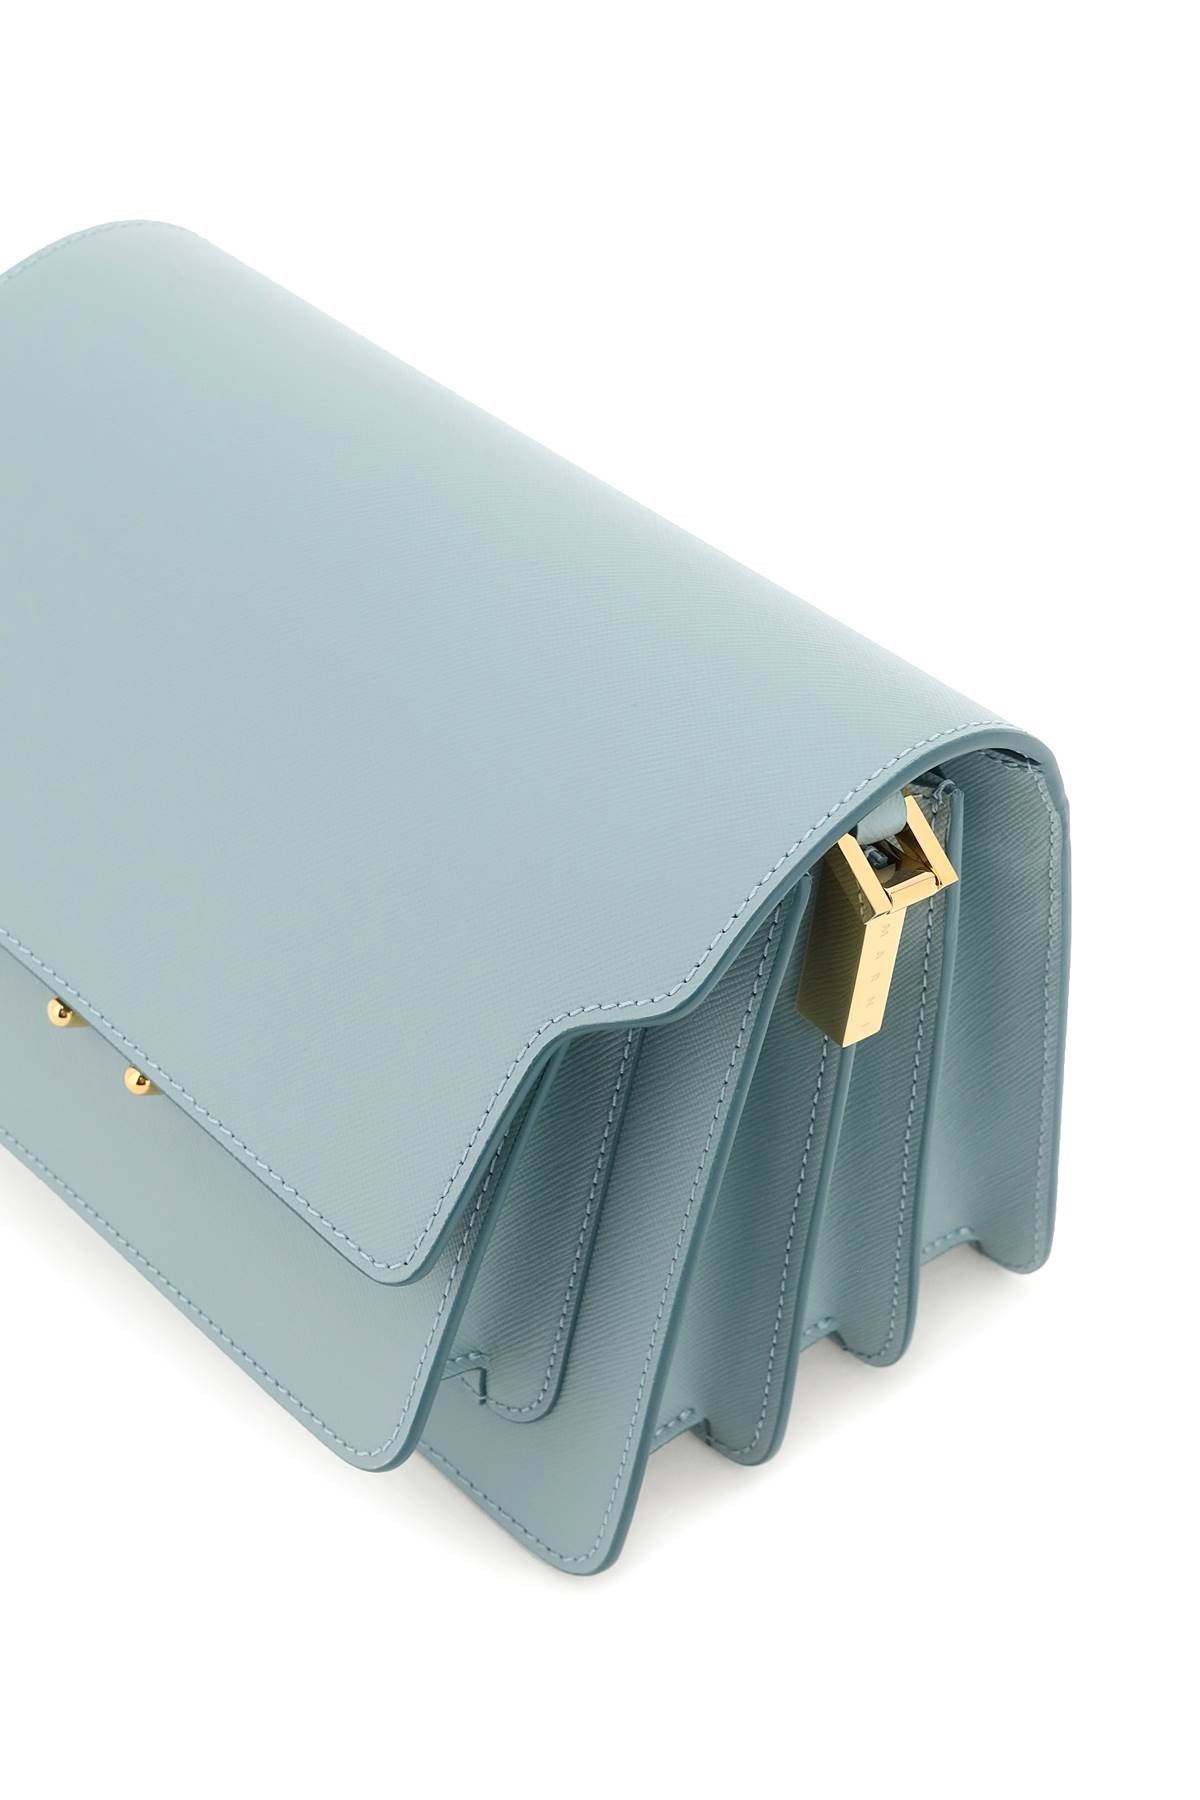 MARNI Chic Light Blue Saffiano Leather Crossbody Bag with Gold-Tone Hardware - Medium